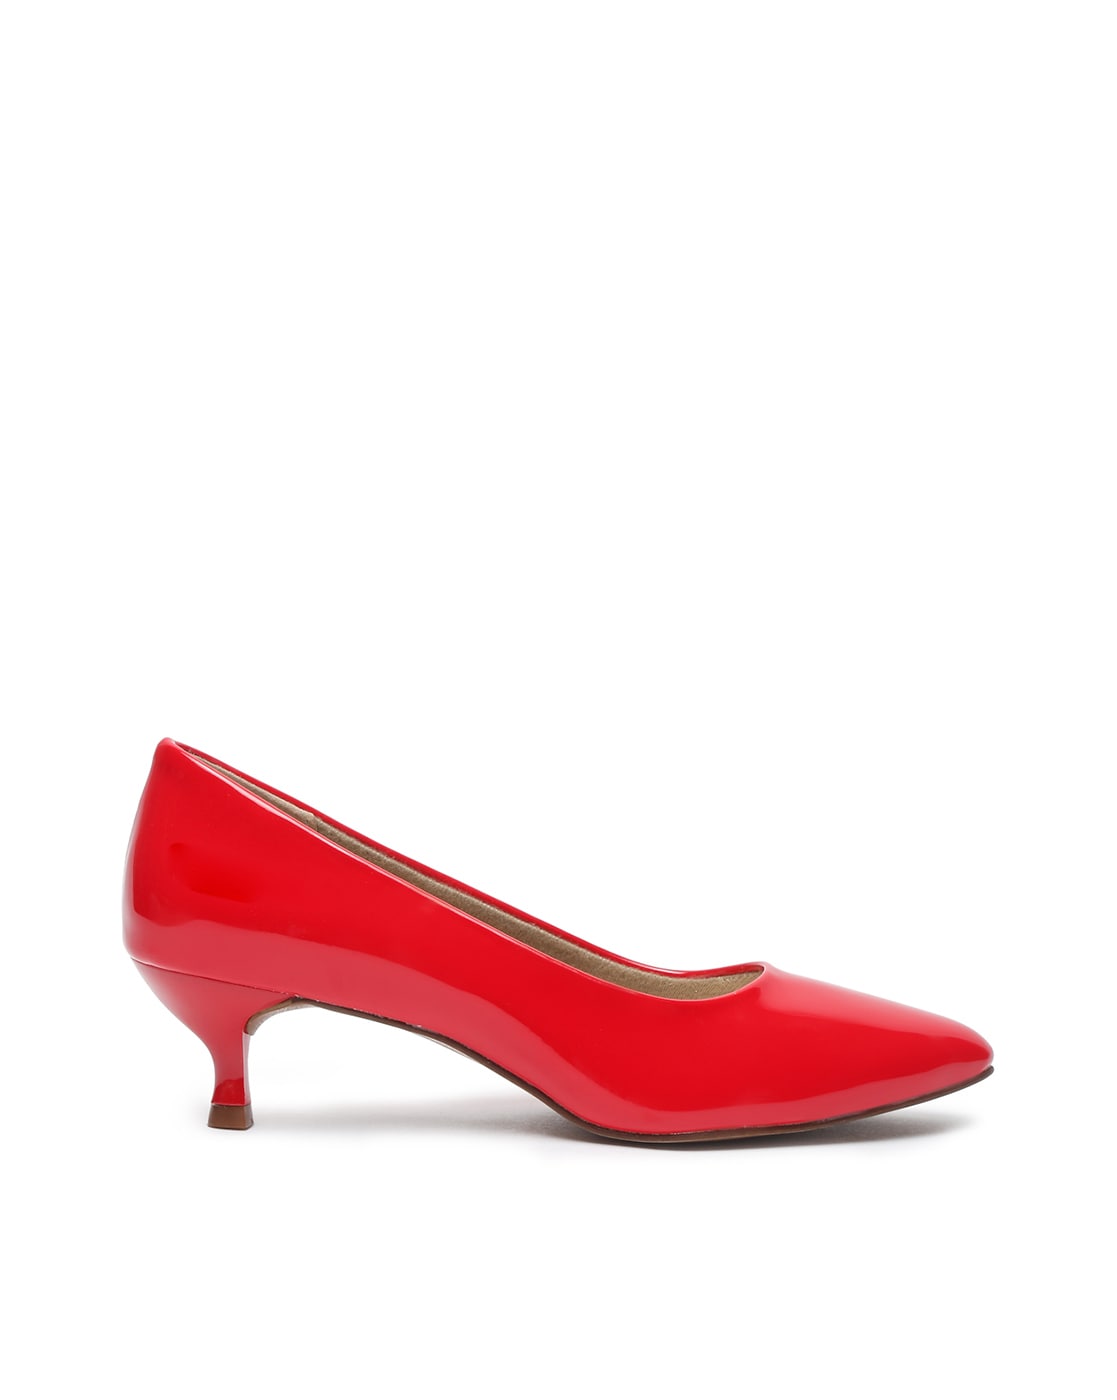 Women 9cm High Heels Red Pumps Lady Wedding Bridal Heels Prom Shoes | eBay